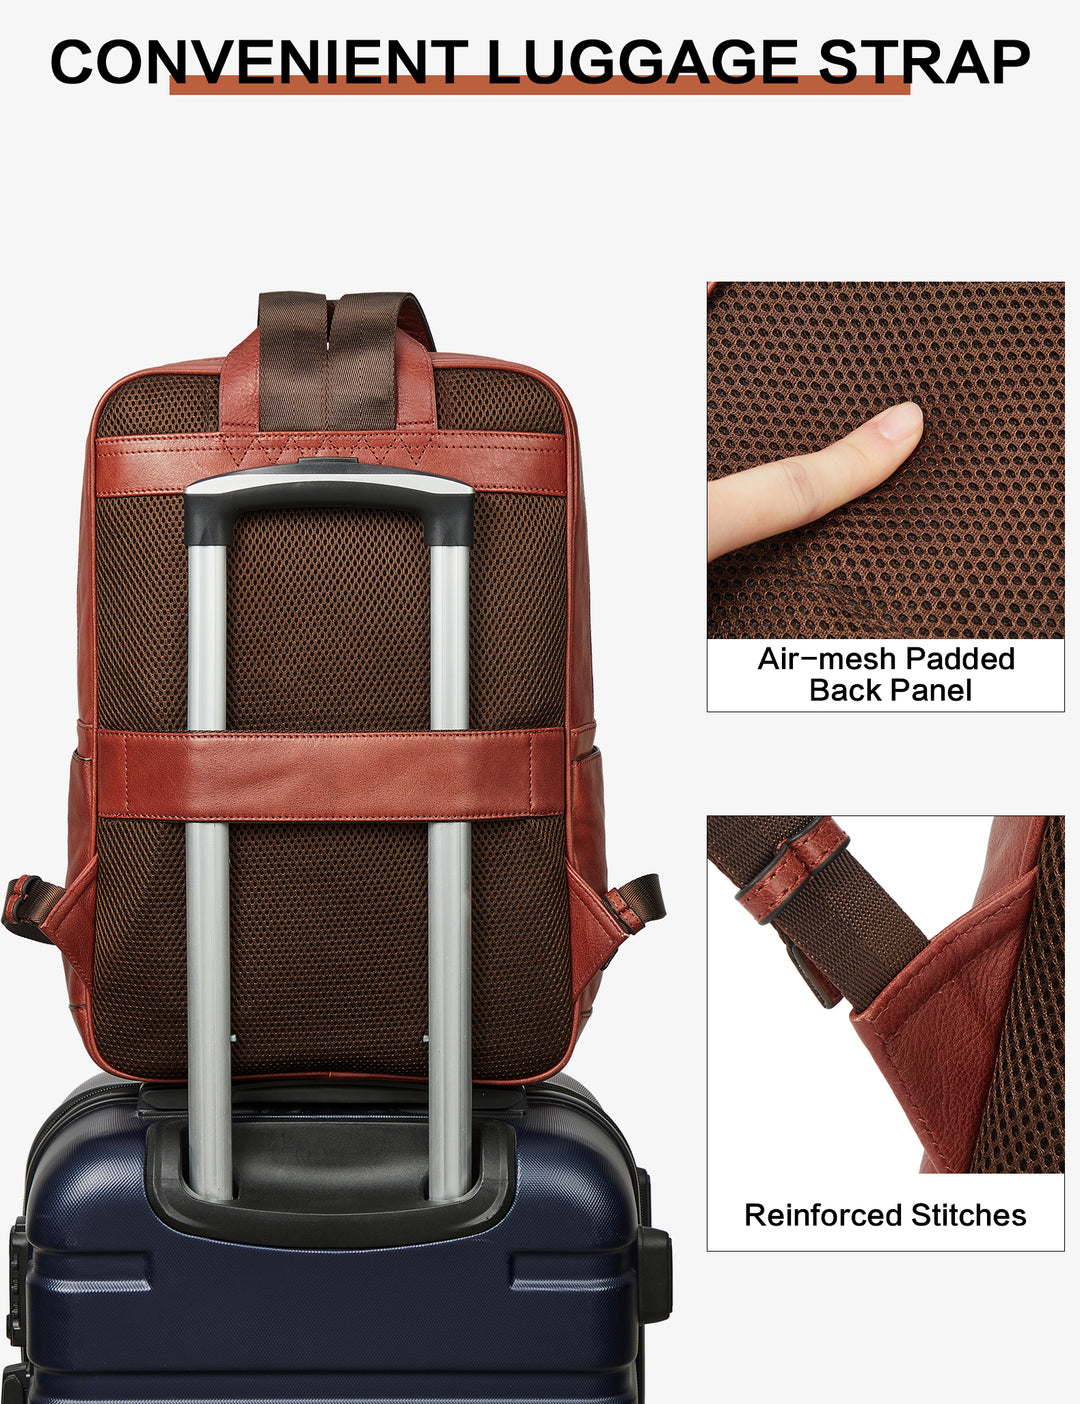 Luxury Italian Leather Backpack for Men